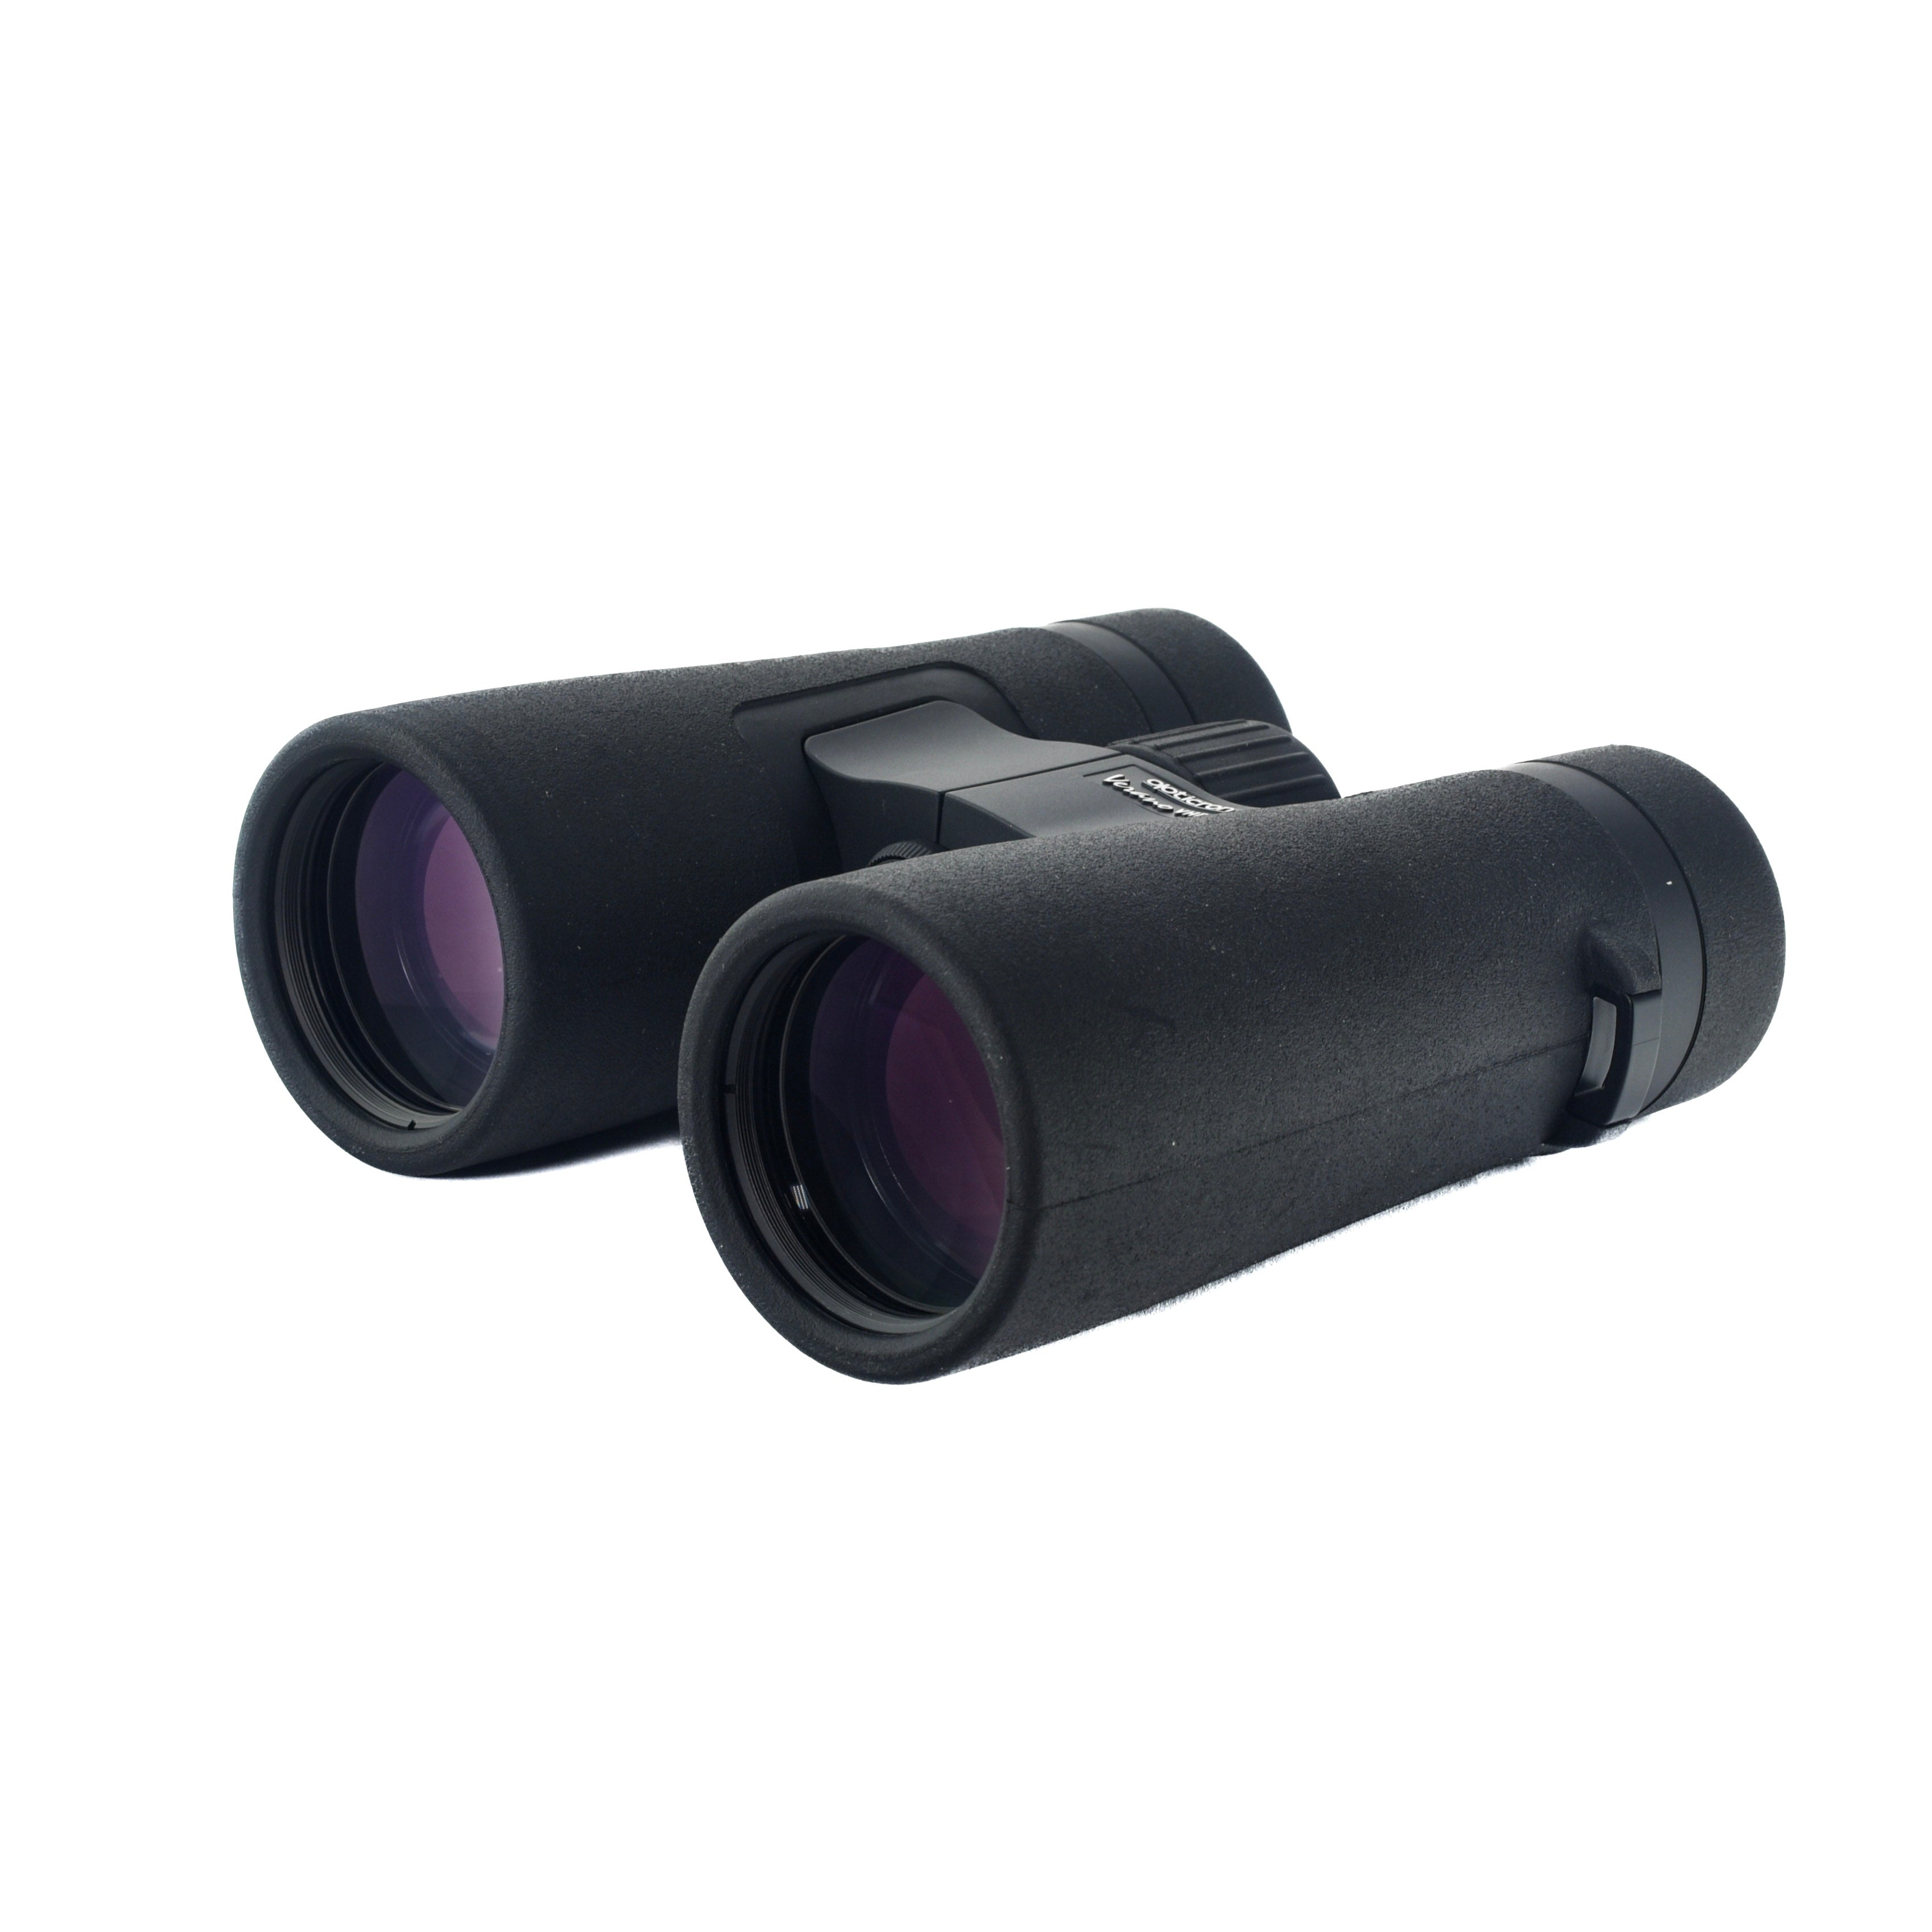 Opticron Verano 8x42 BGA VHD Binoculars (Black)